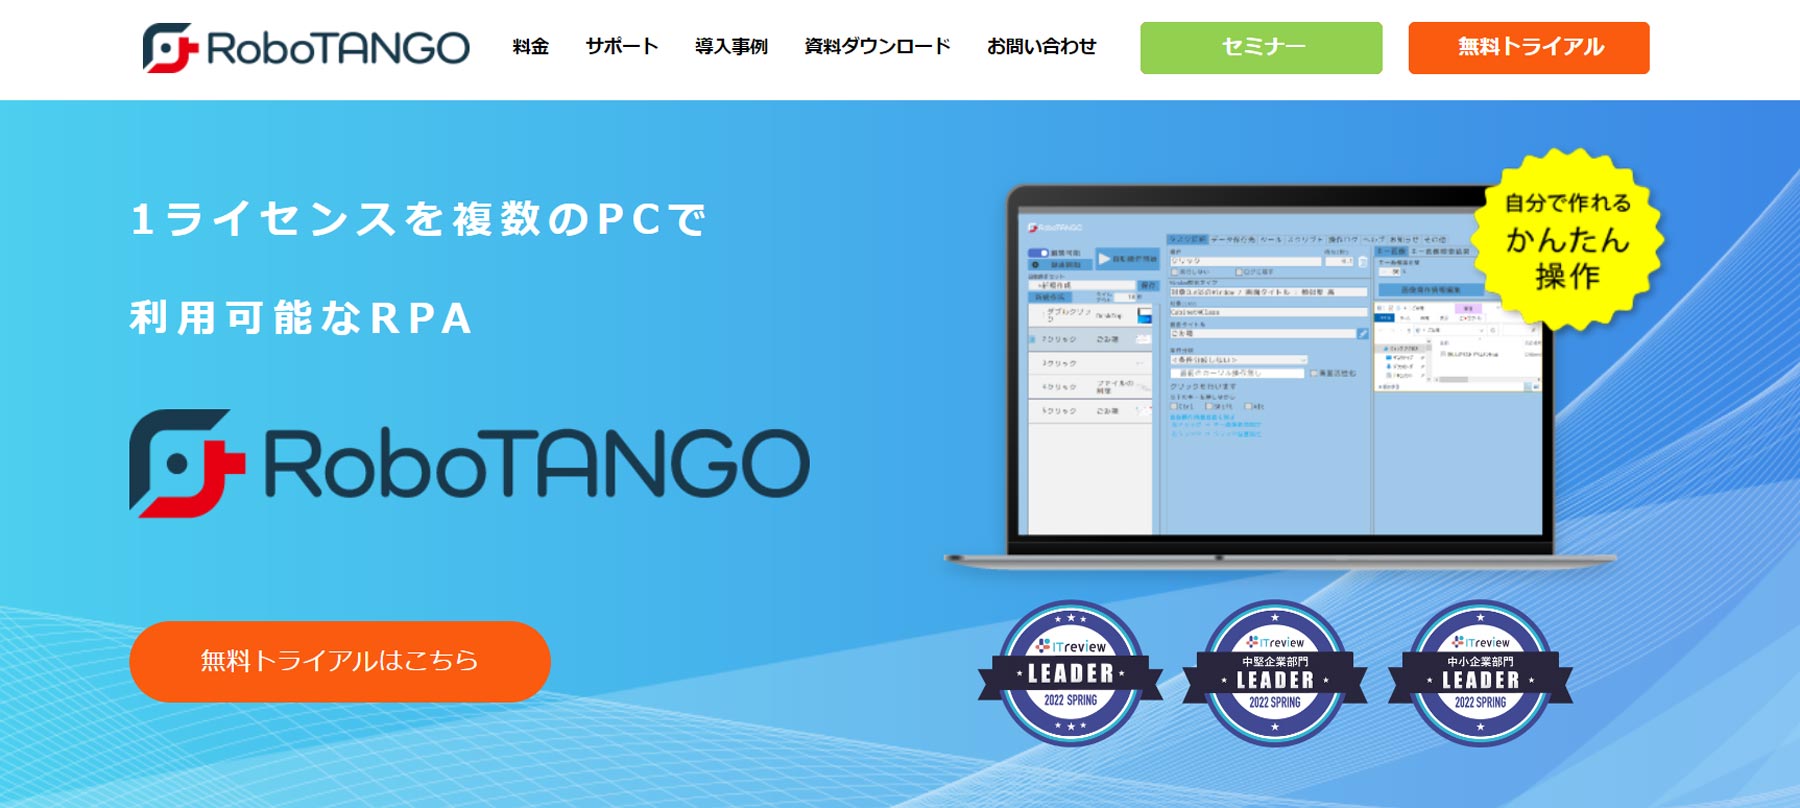 RoboTANGO公式Webサイト